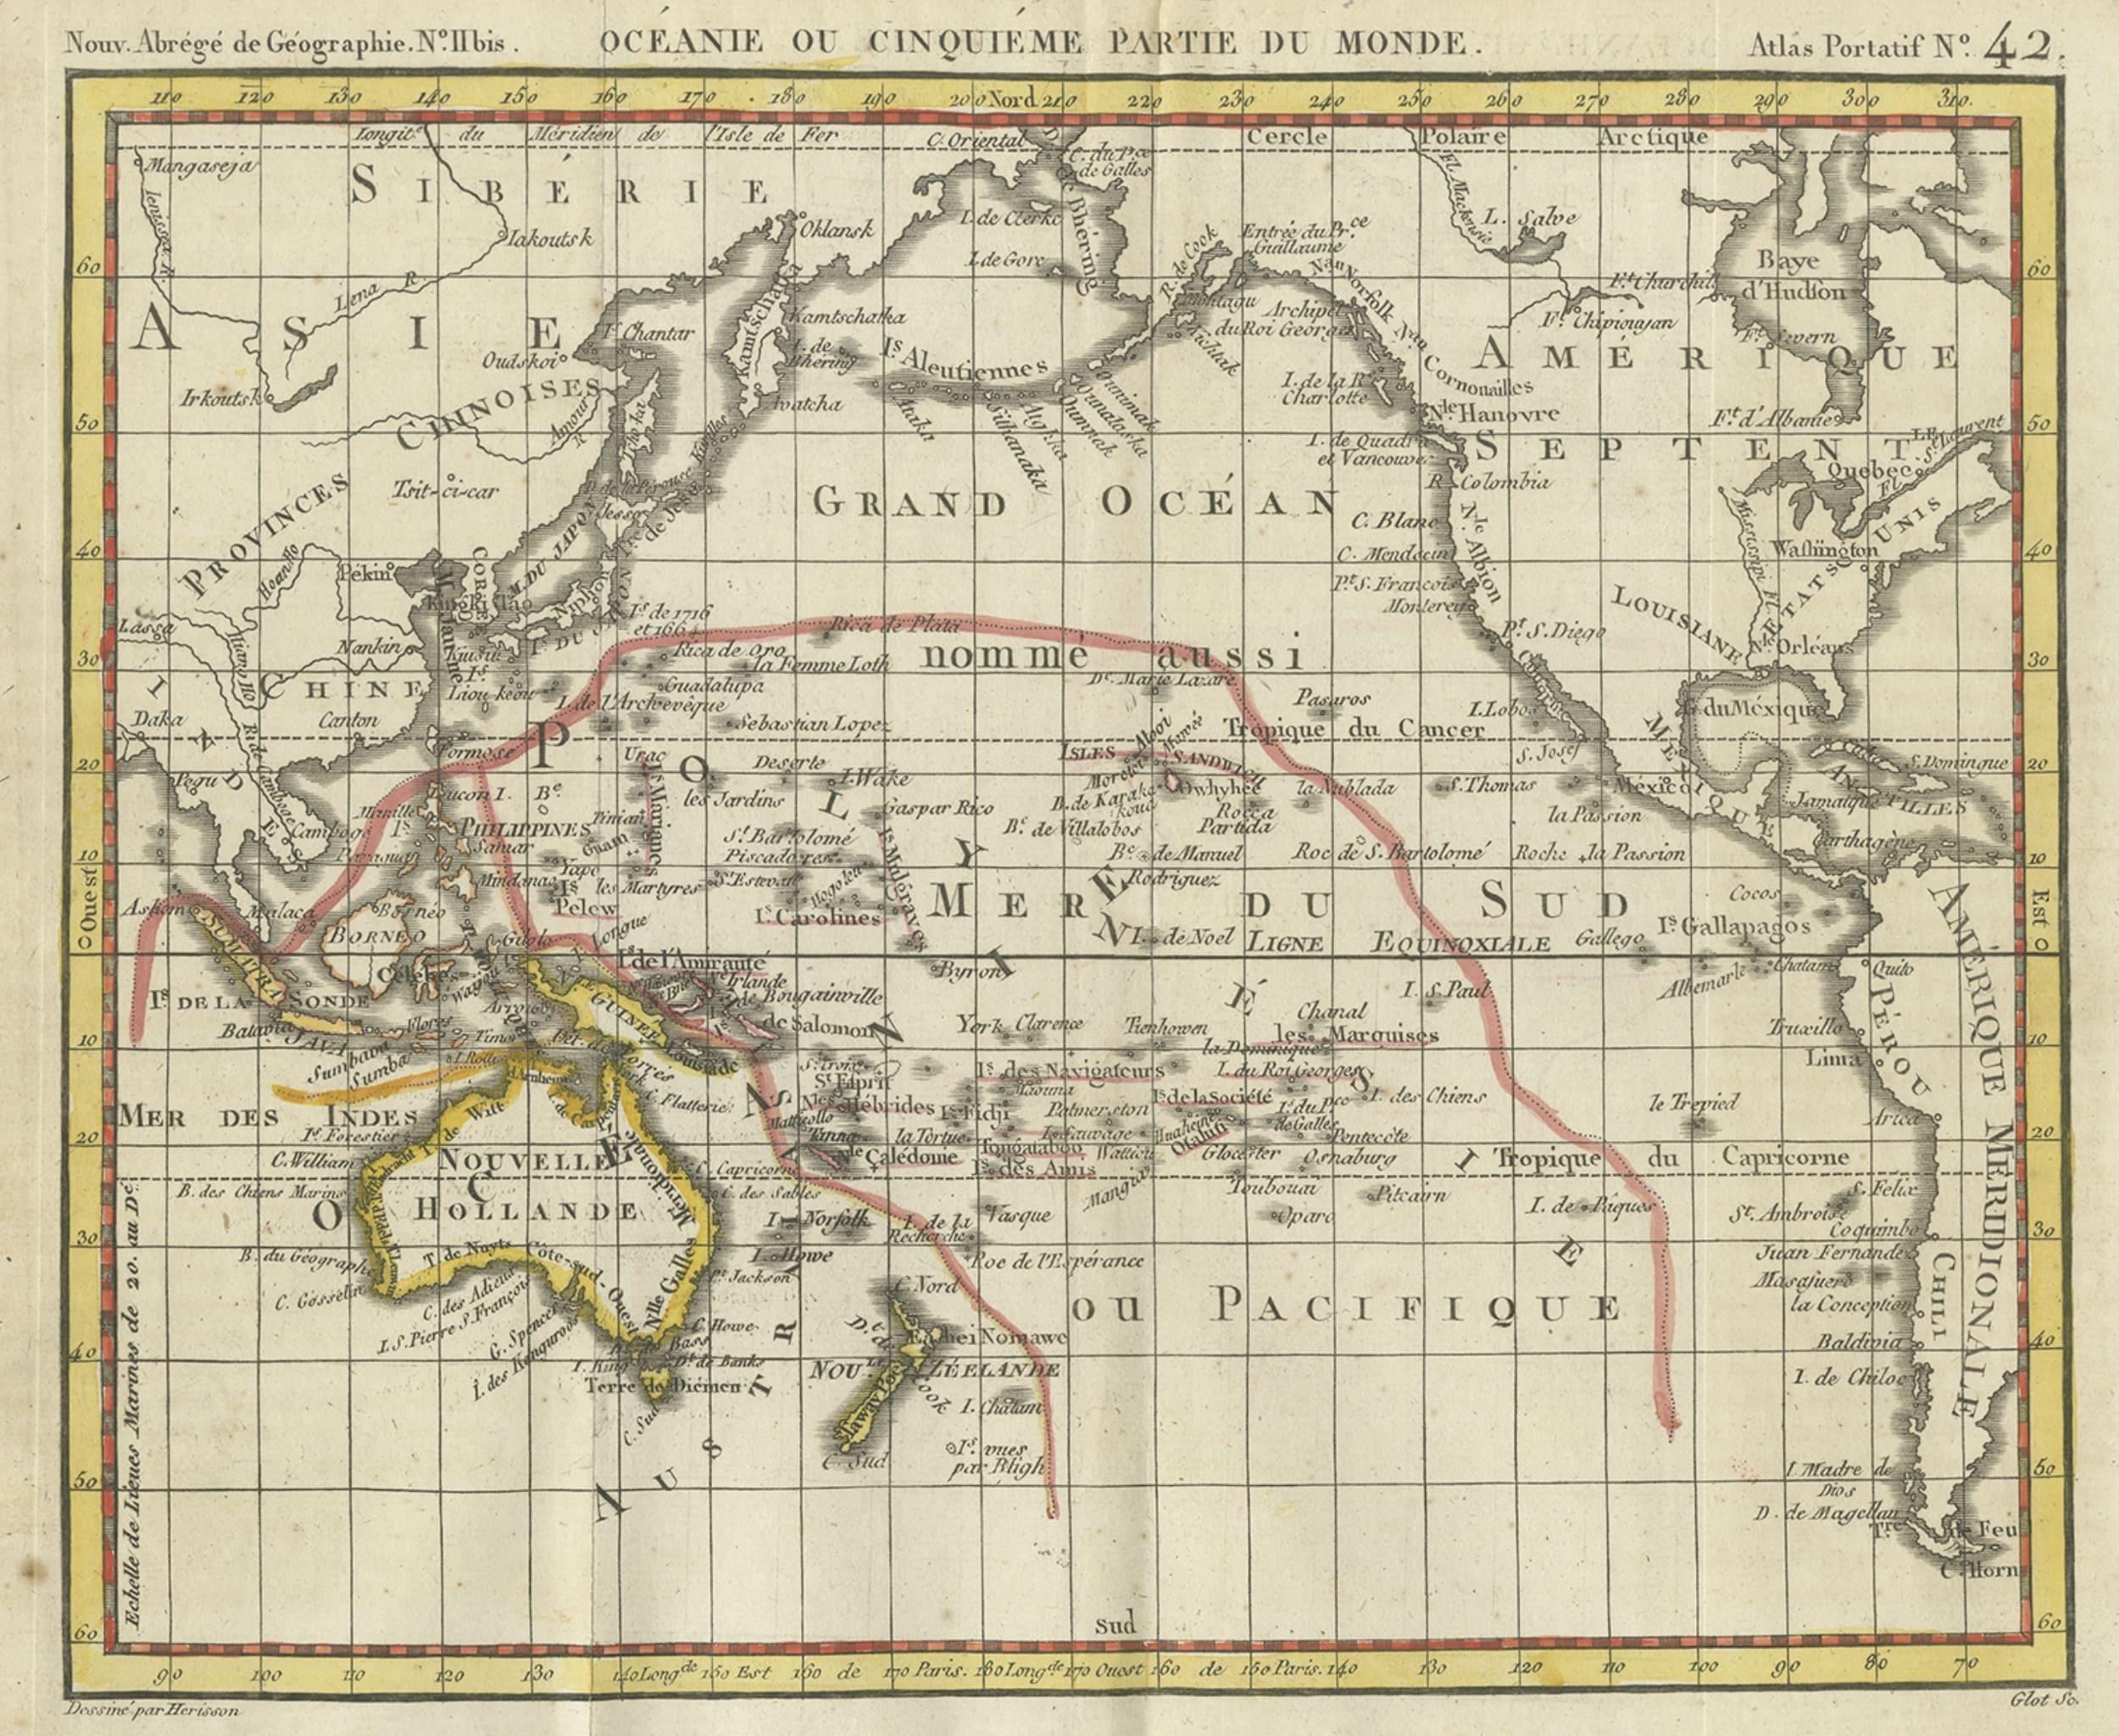 Antique map titled ‘Océanie ou cinquième partie du monde‘. 

This is an original antique map of Oceania, the 5th continent, by Herisson taken from atlas 